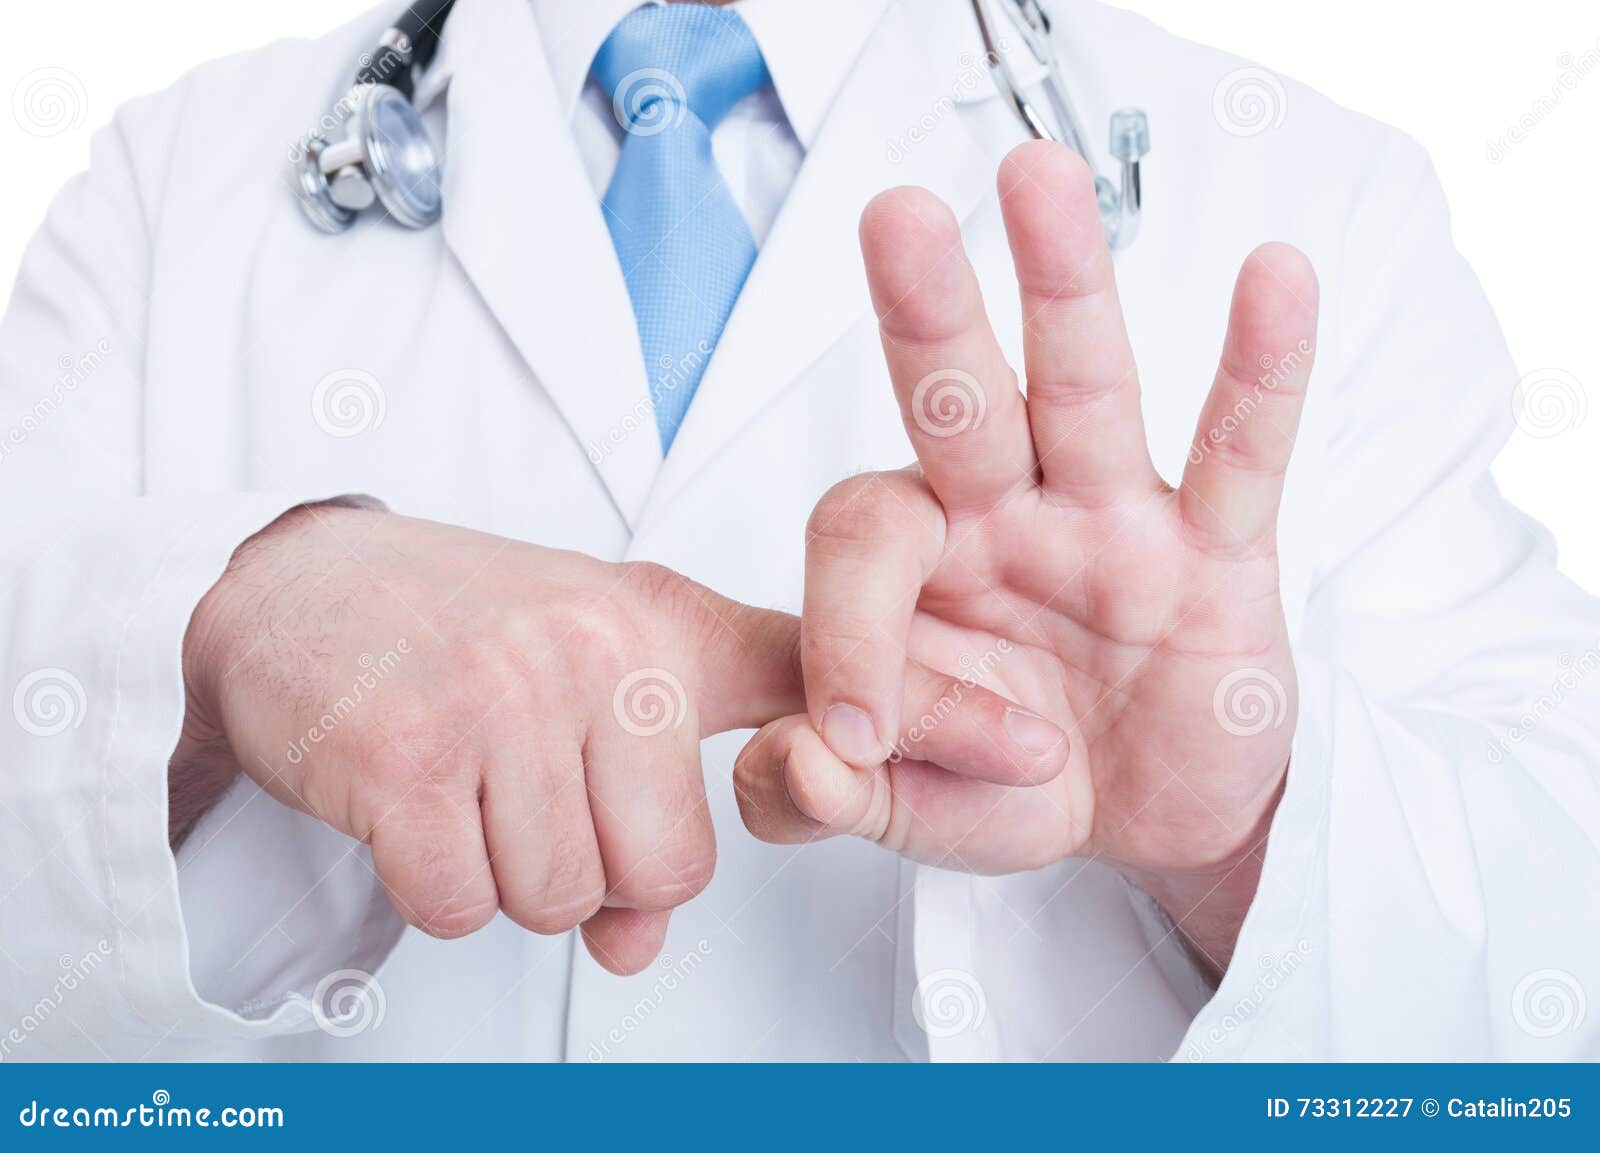 врач пальцем в жопу фото 99